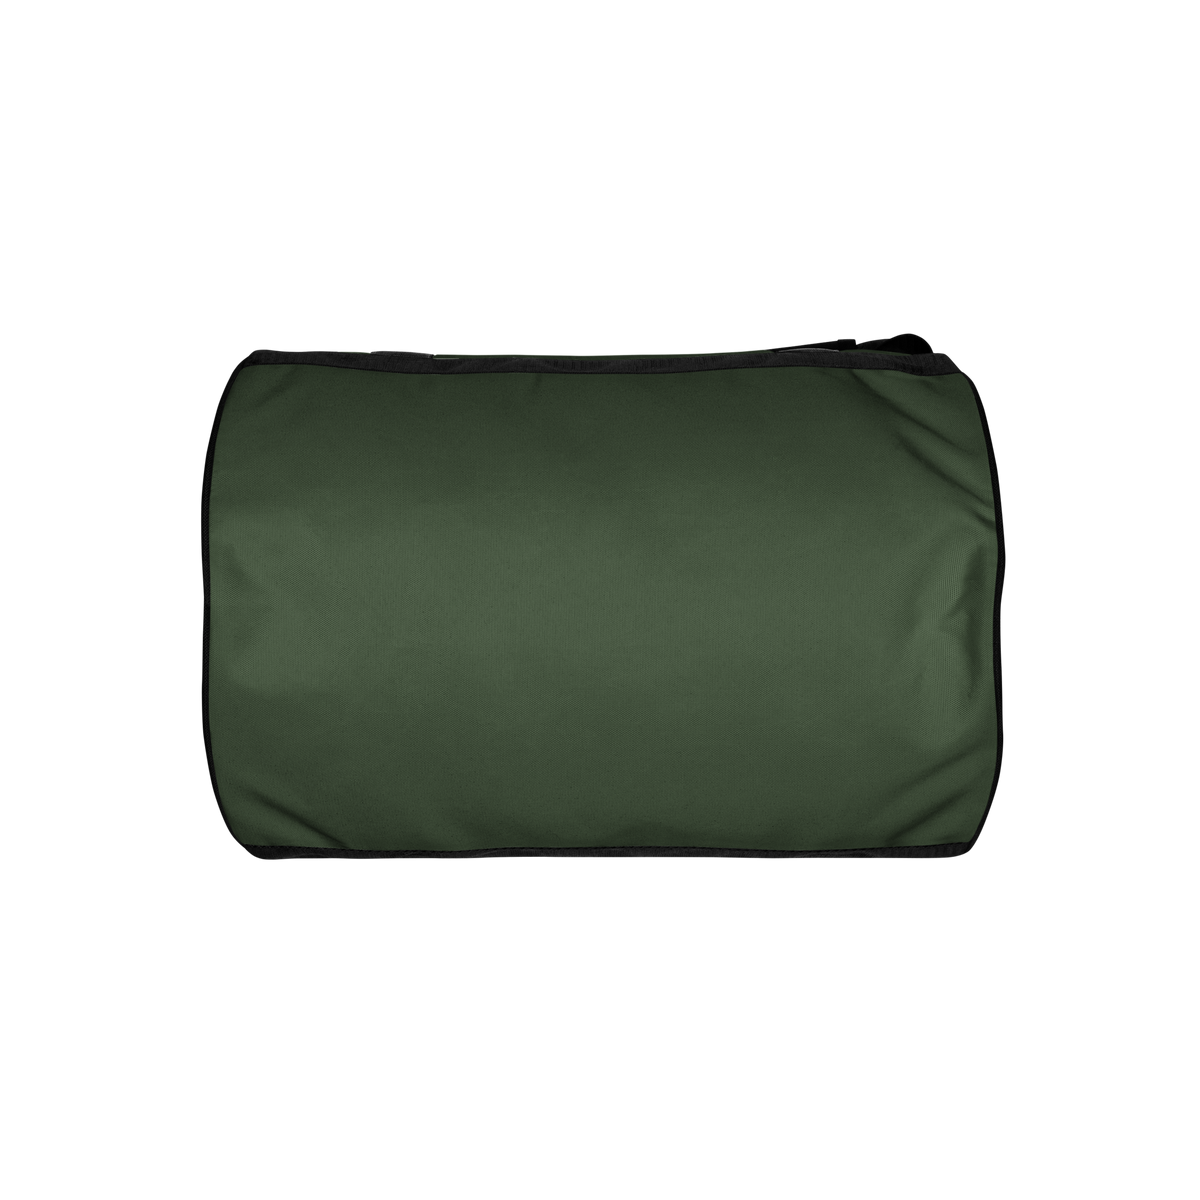 Green Super Sturdy mm Duffle Bag